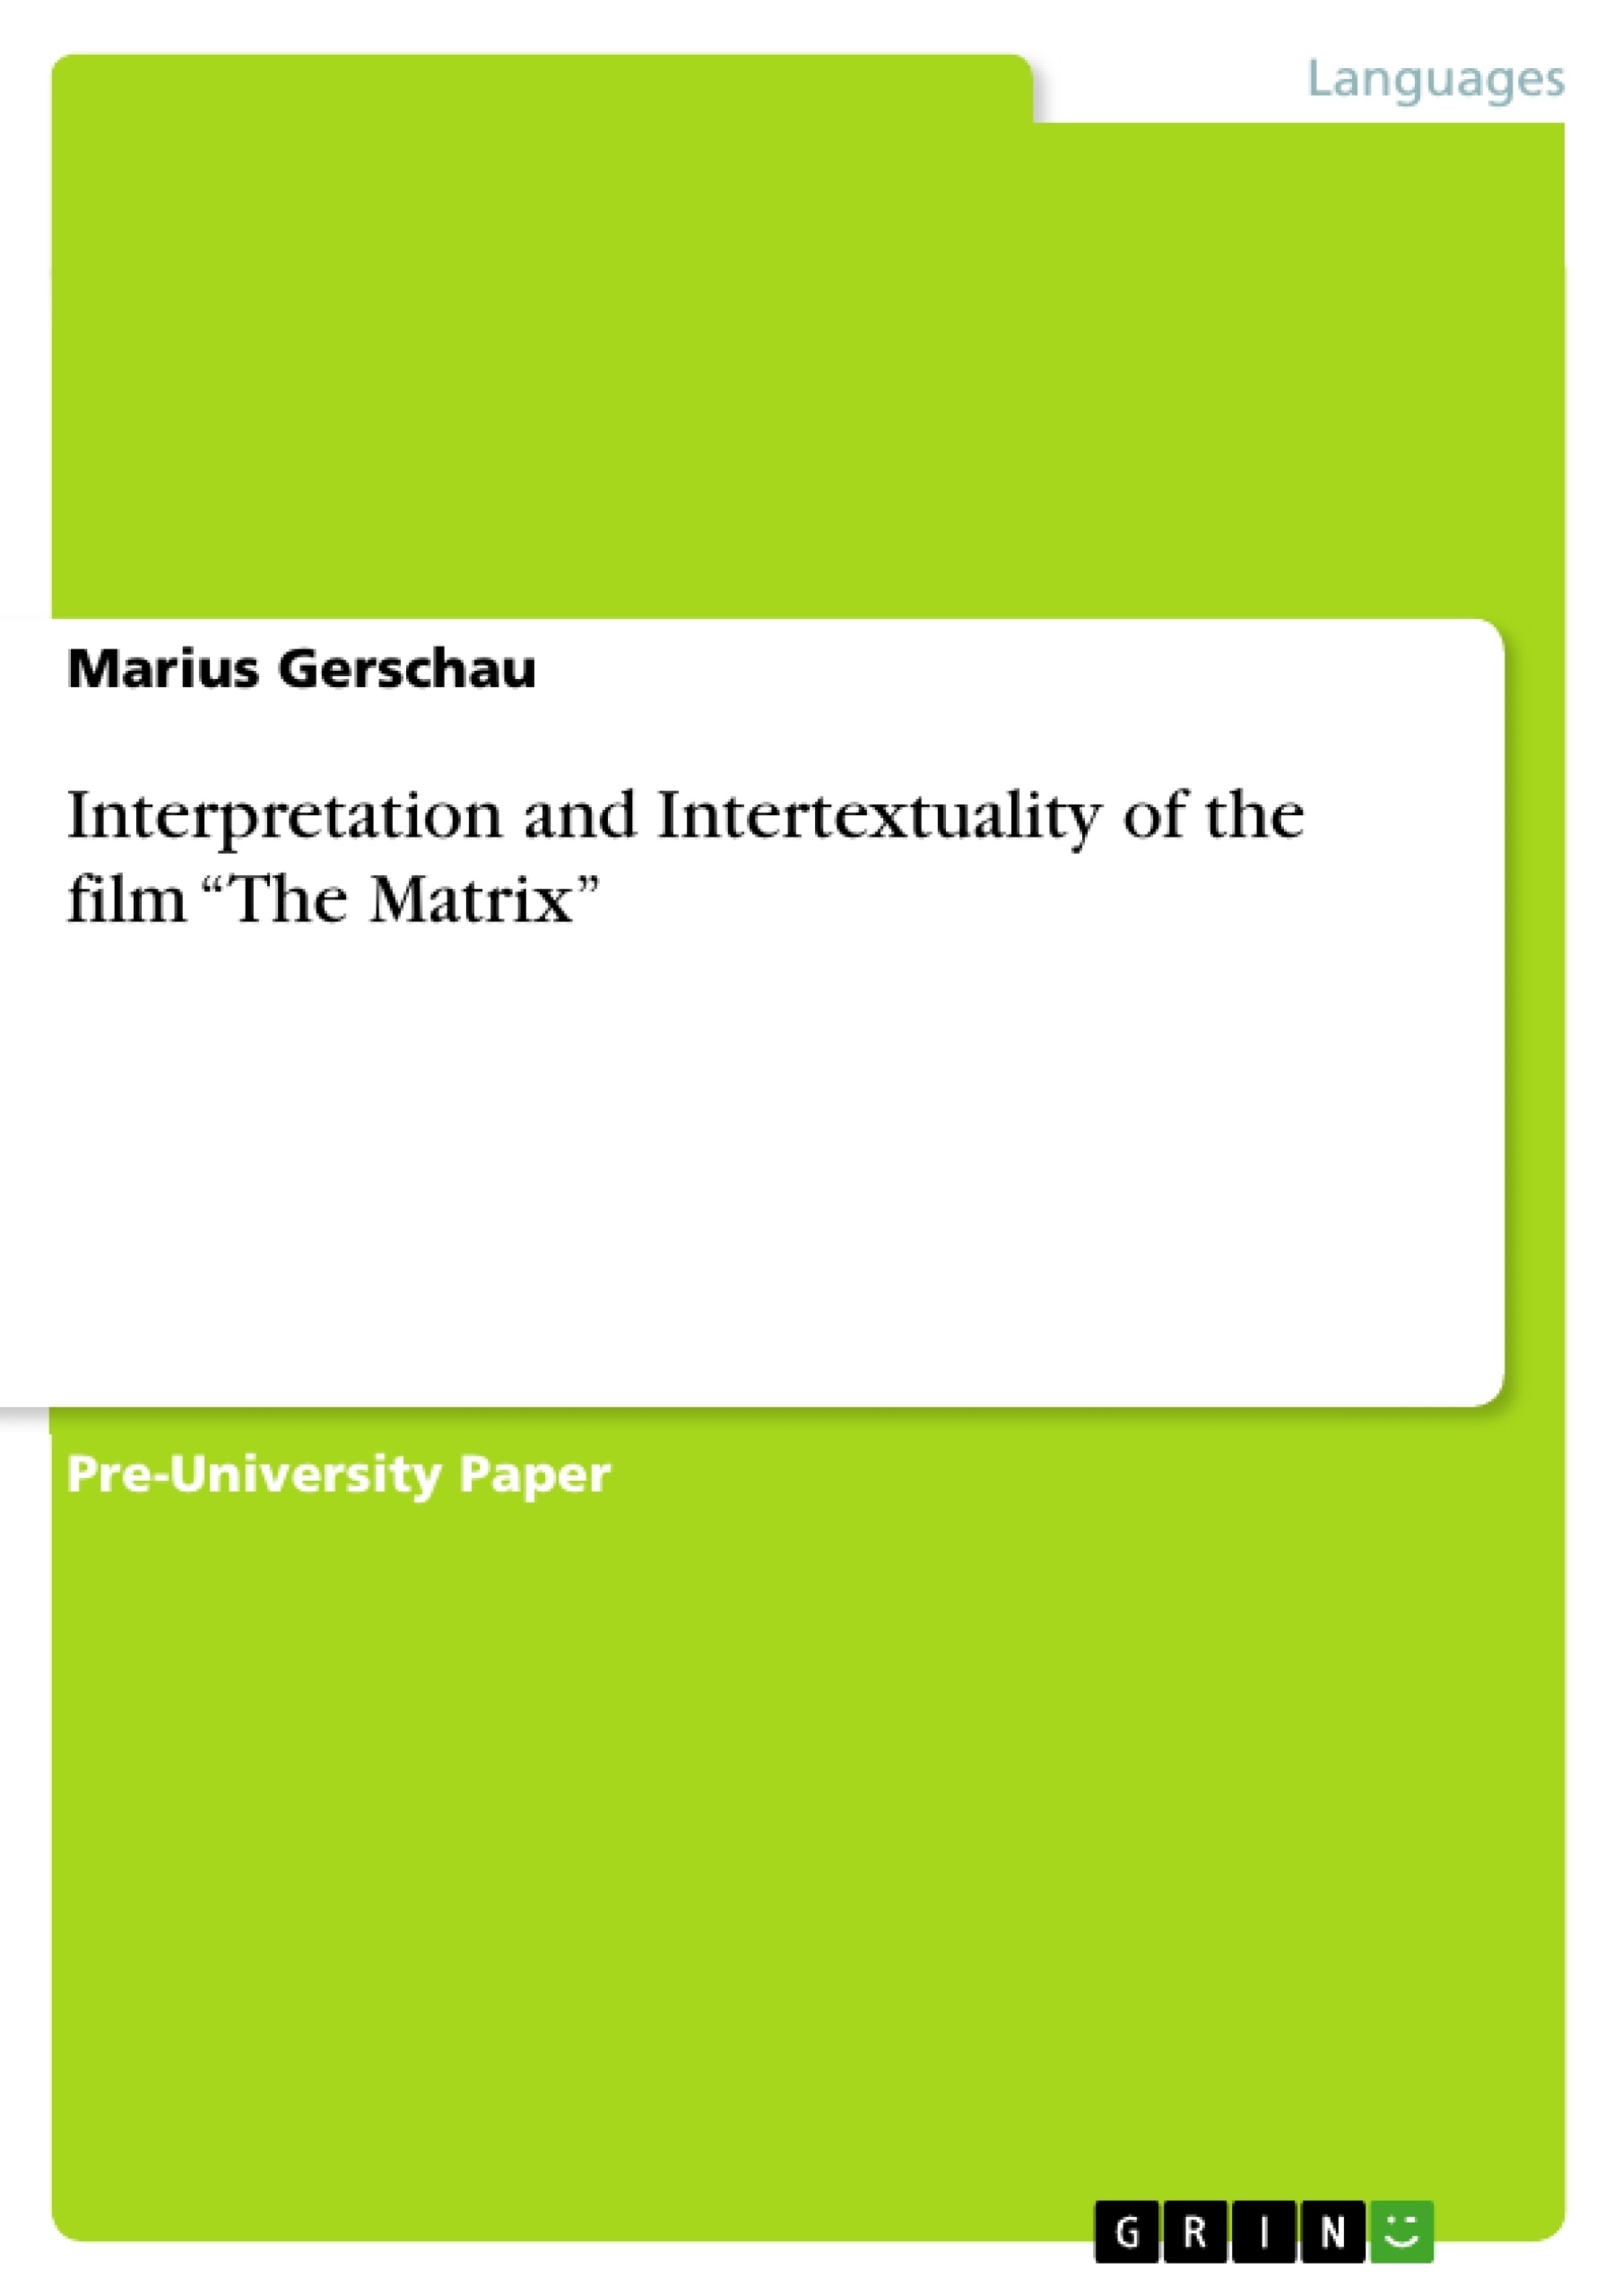 Title: Interpretation and Intertextuality of the film “The Matrix”